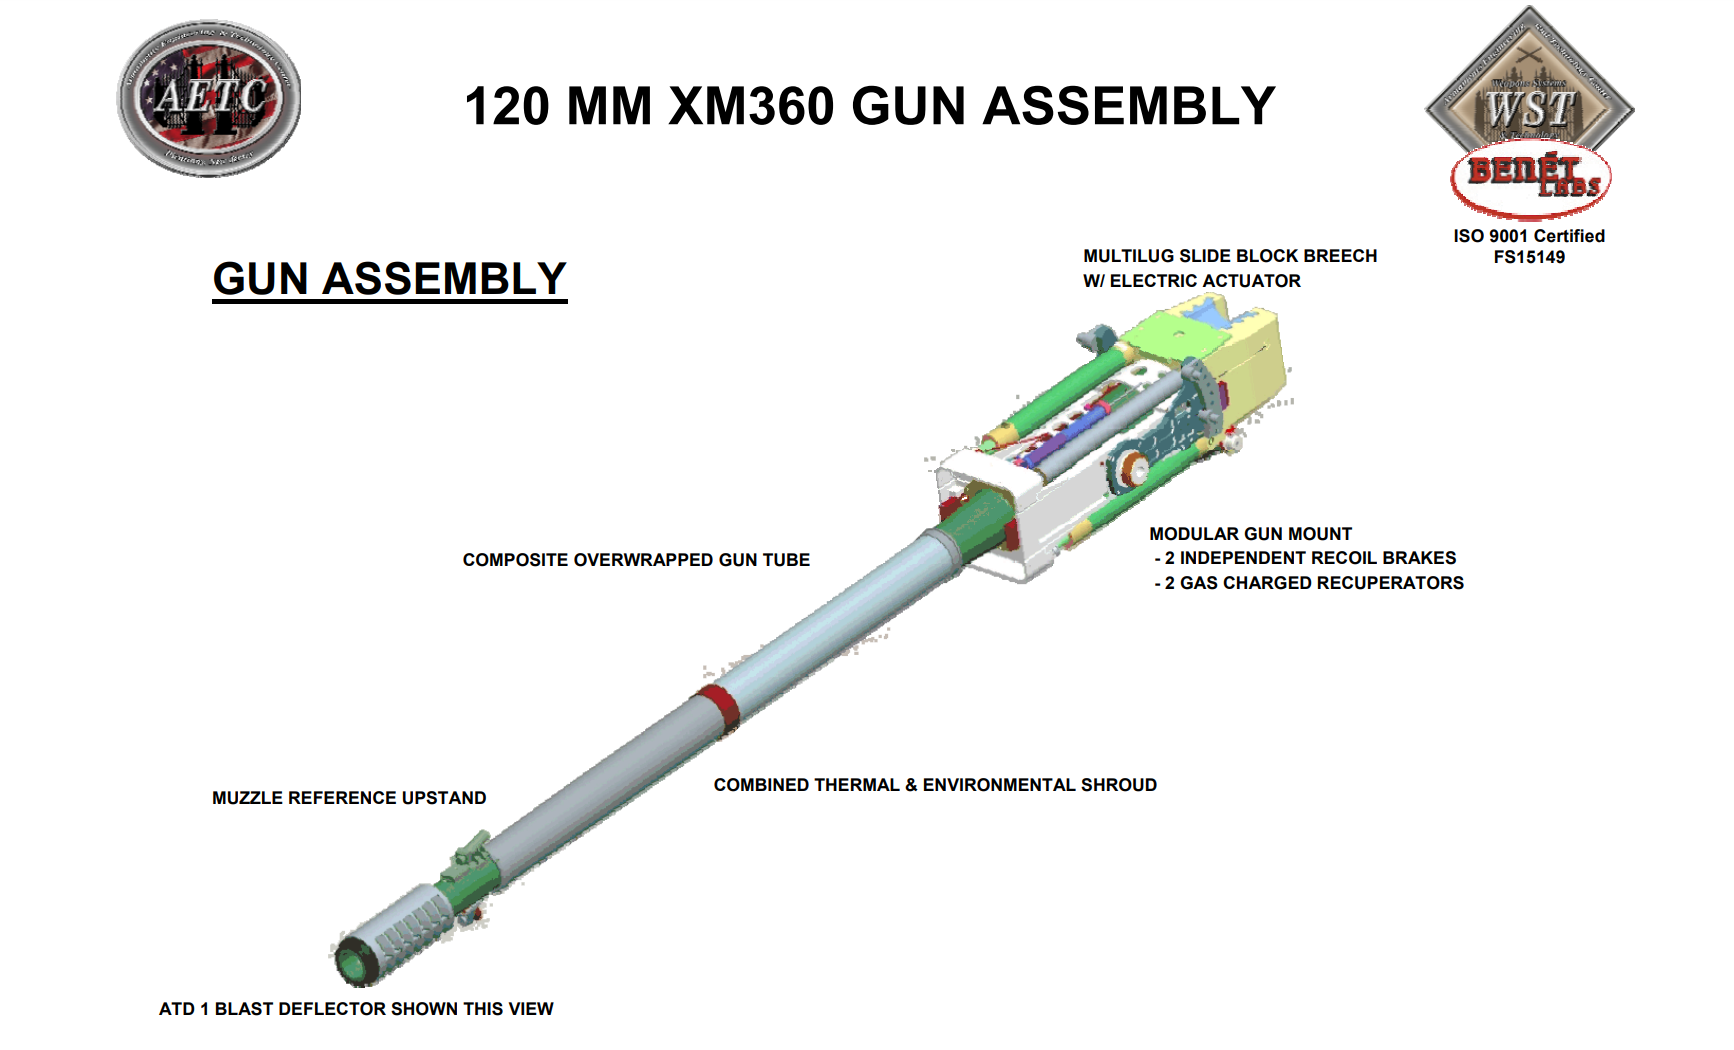 The XM360 gun used on the AbramsX.